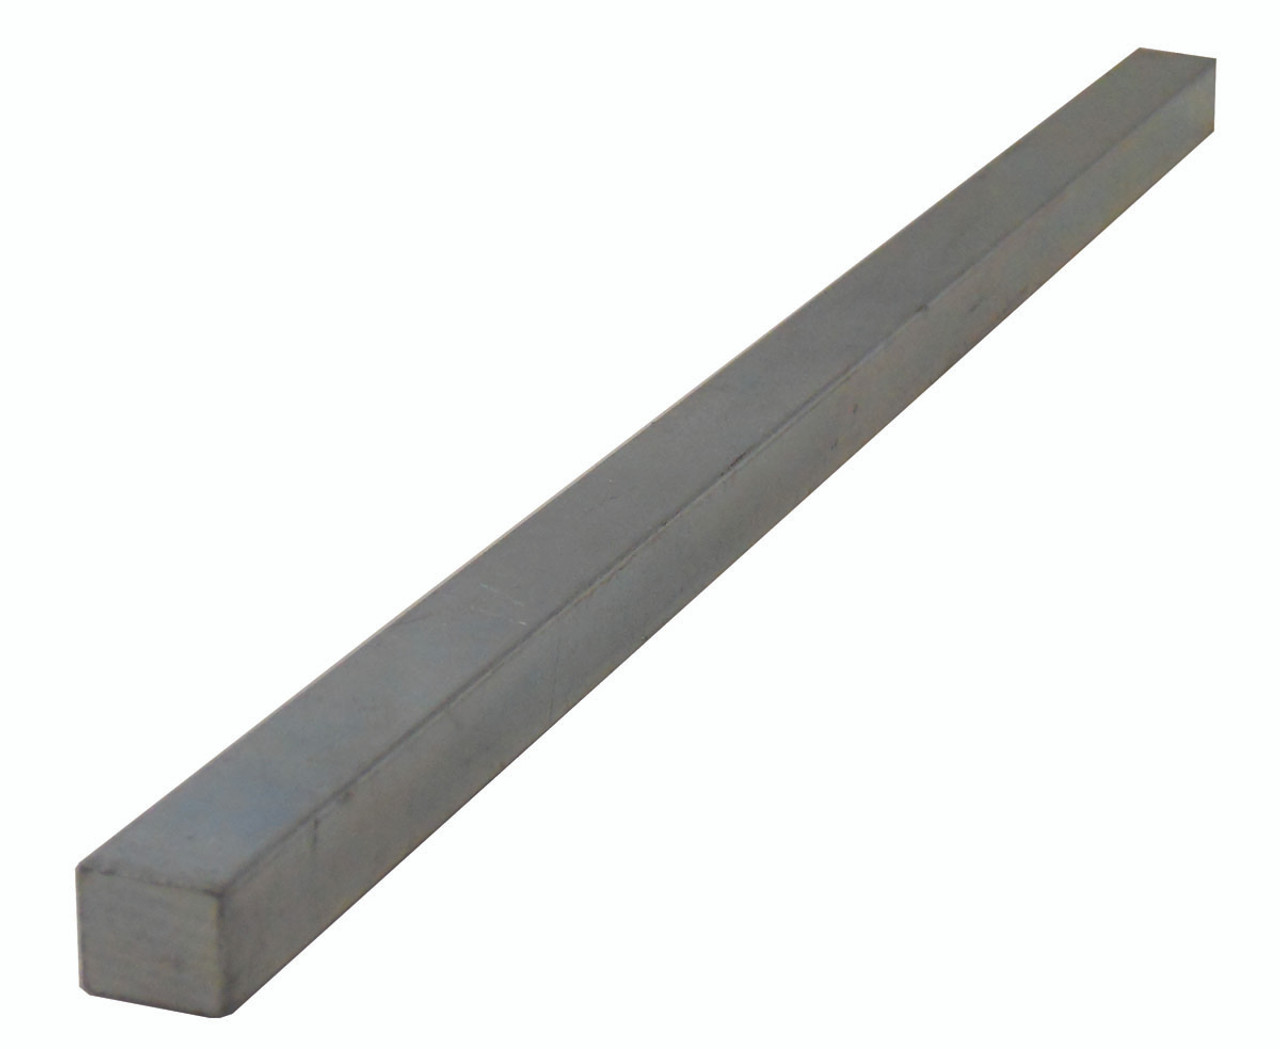 Rectangular SAE 1 x 1-1/4 x 12" Zinc Plated Steel Keystock  1.000-1250-12